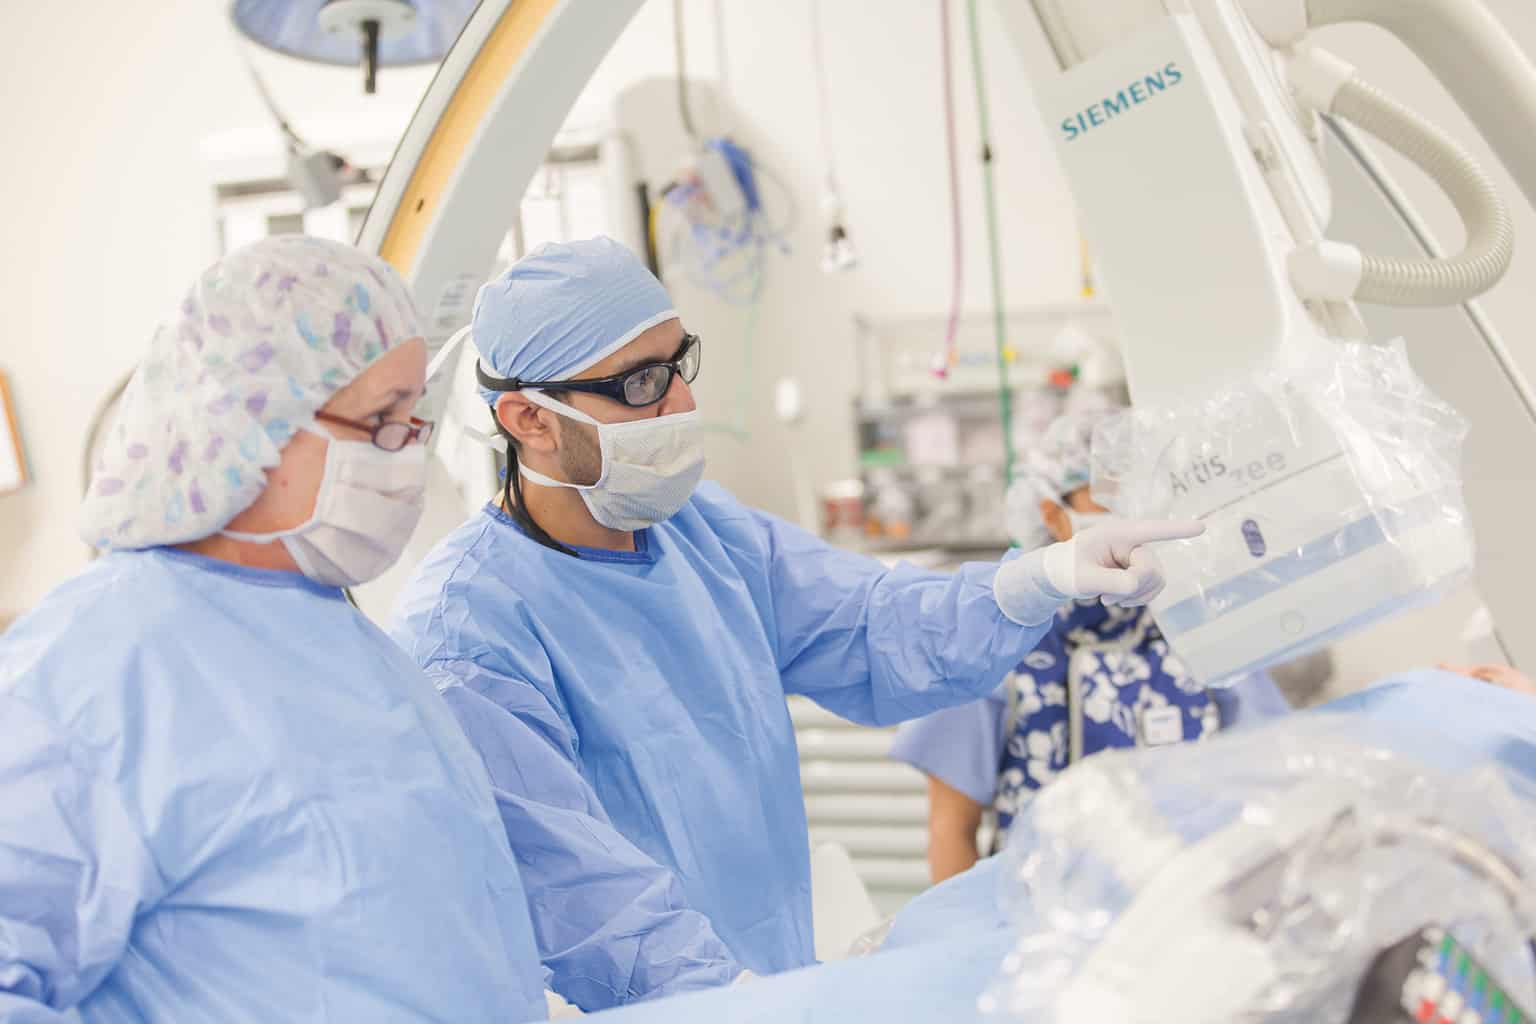 cath lab angiography catheterization laboratory doctors performing cath lab procedures